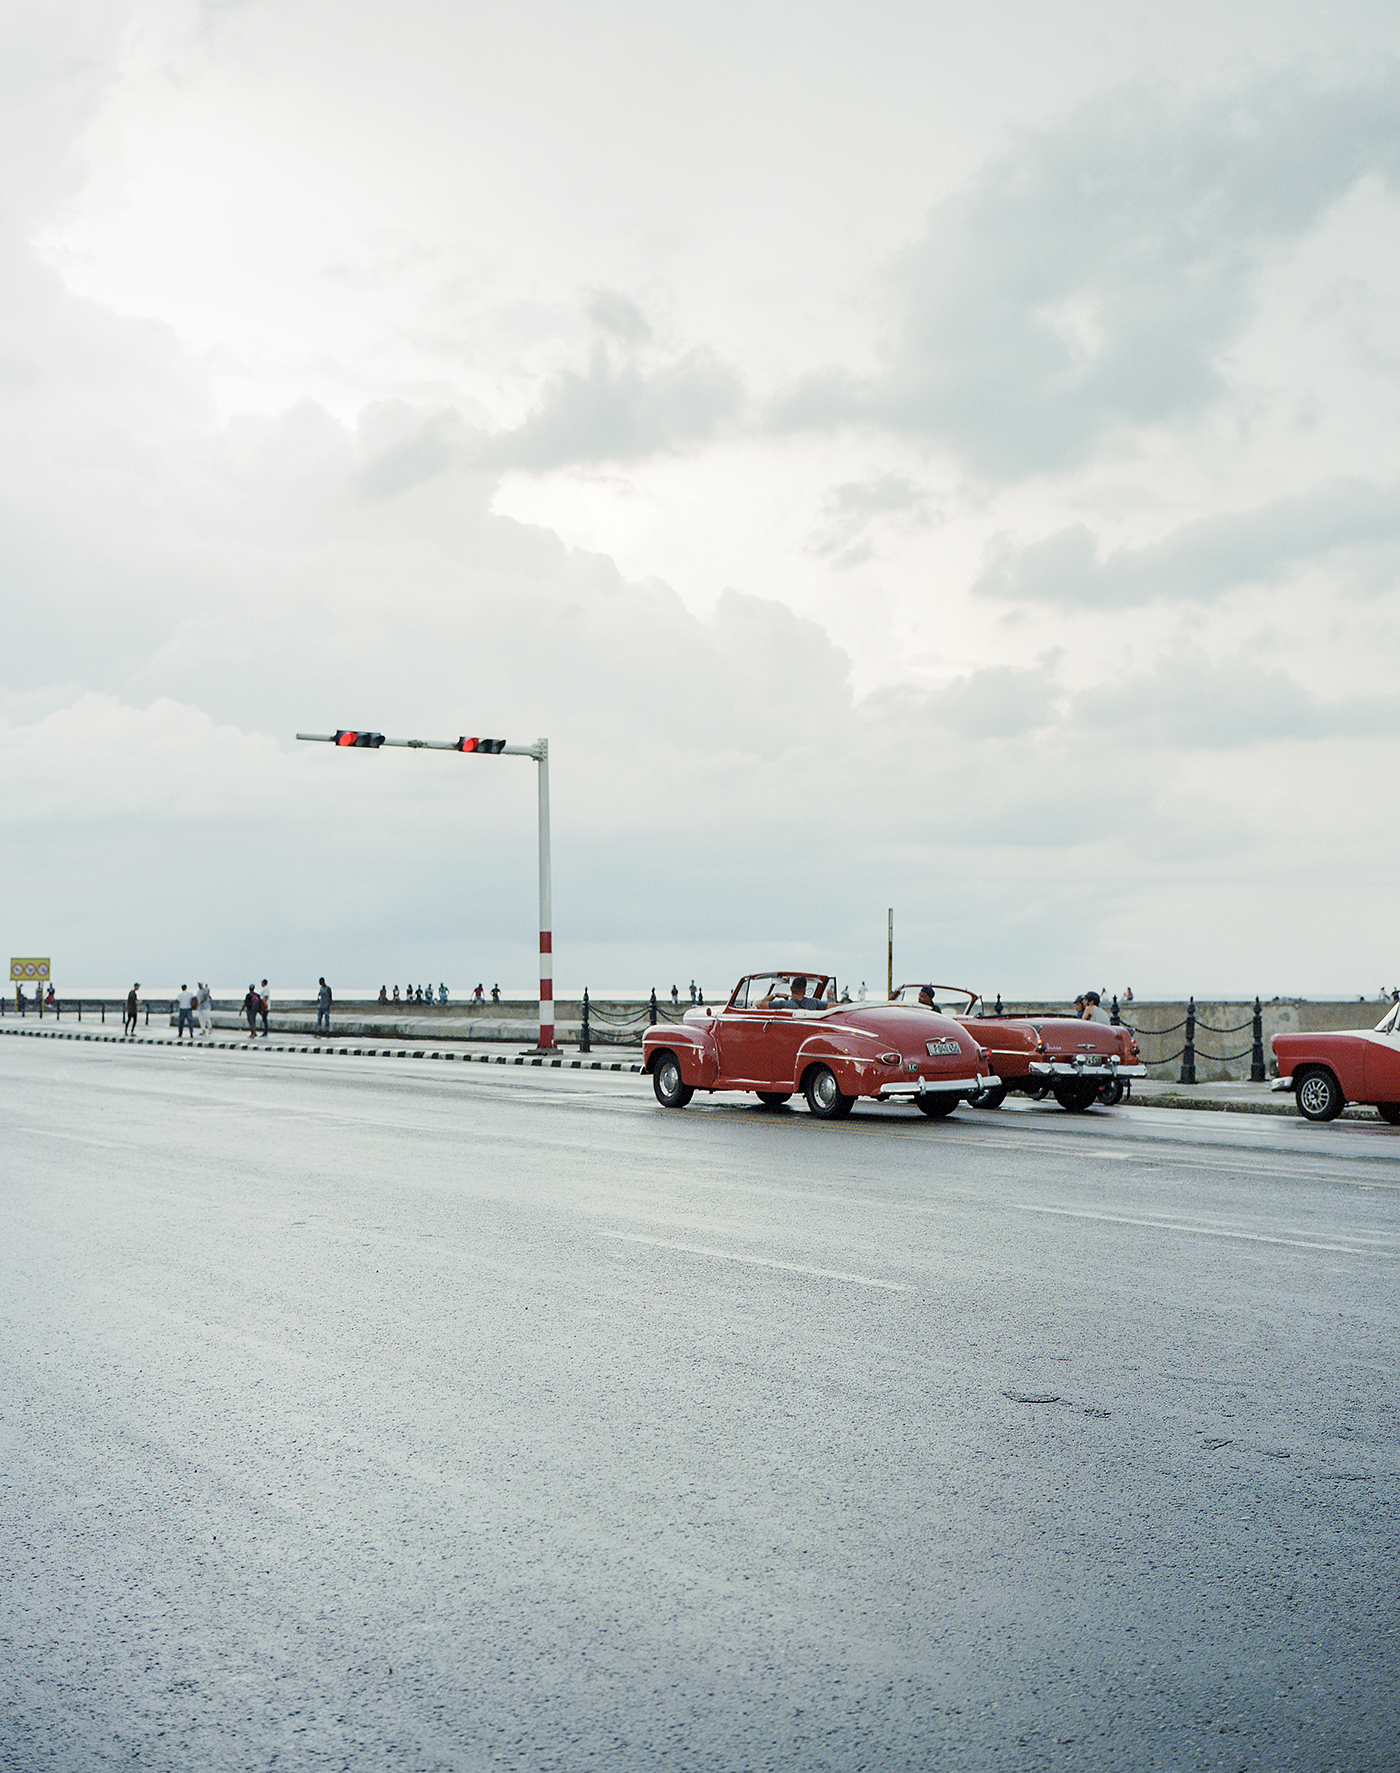 cars waiting at the traffic lights. Malécon, La Habana, Cuba 2018